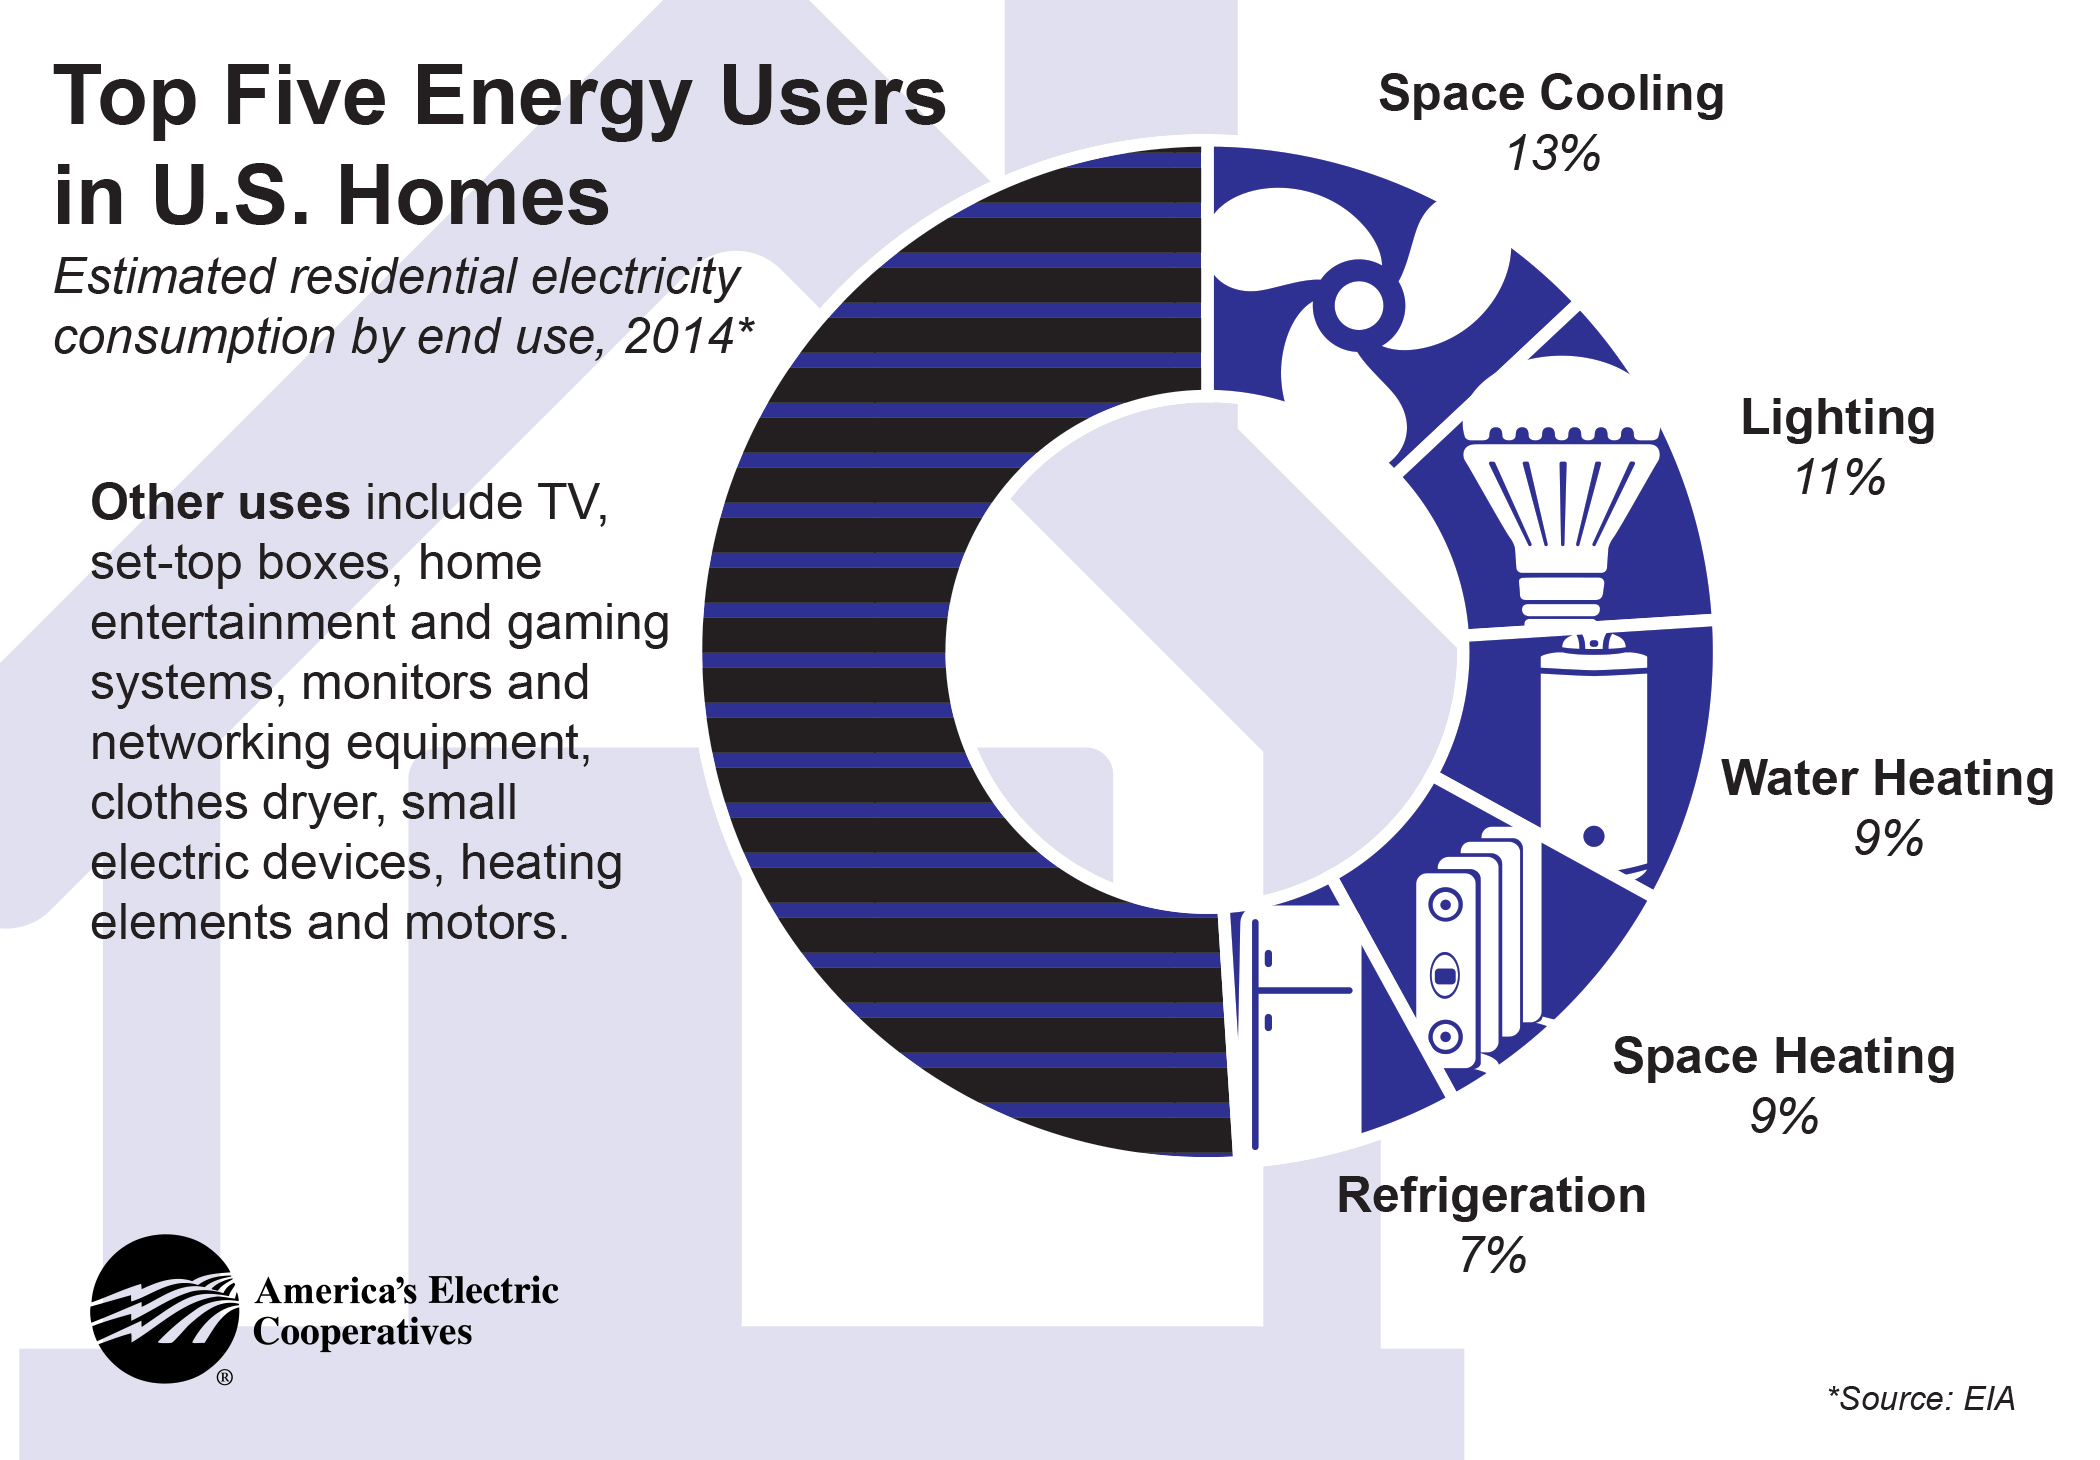 Top 5 Energy Users